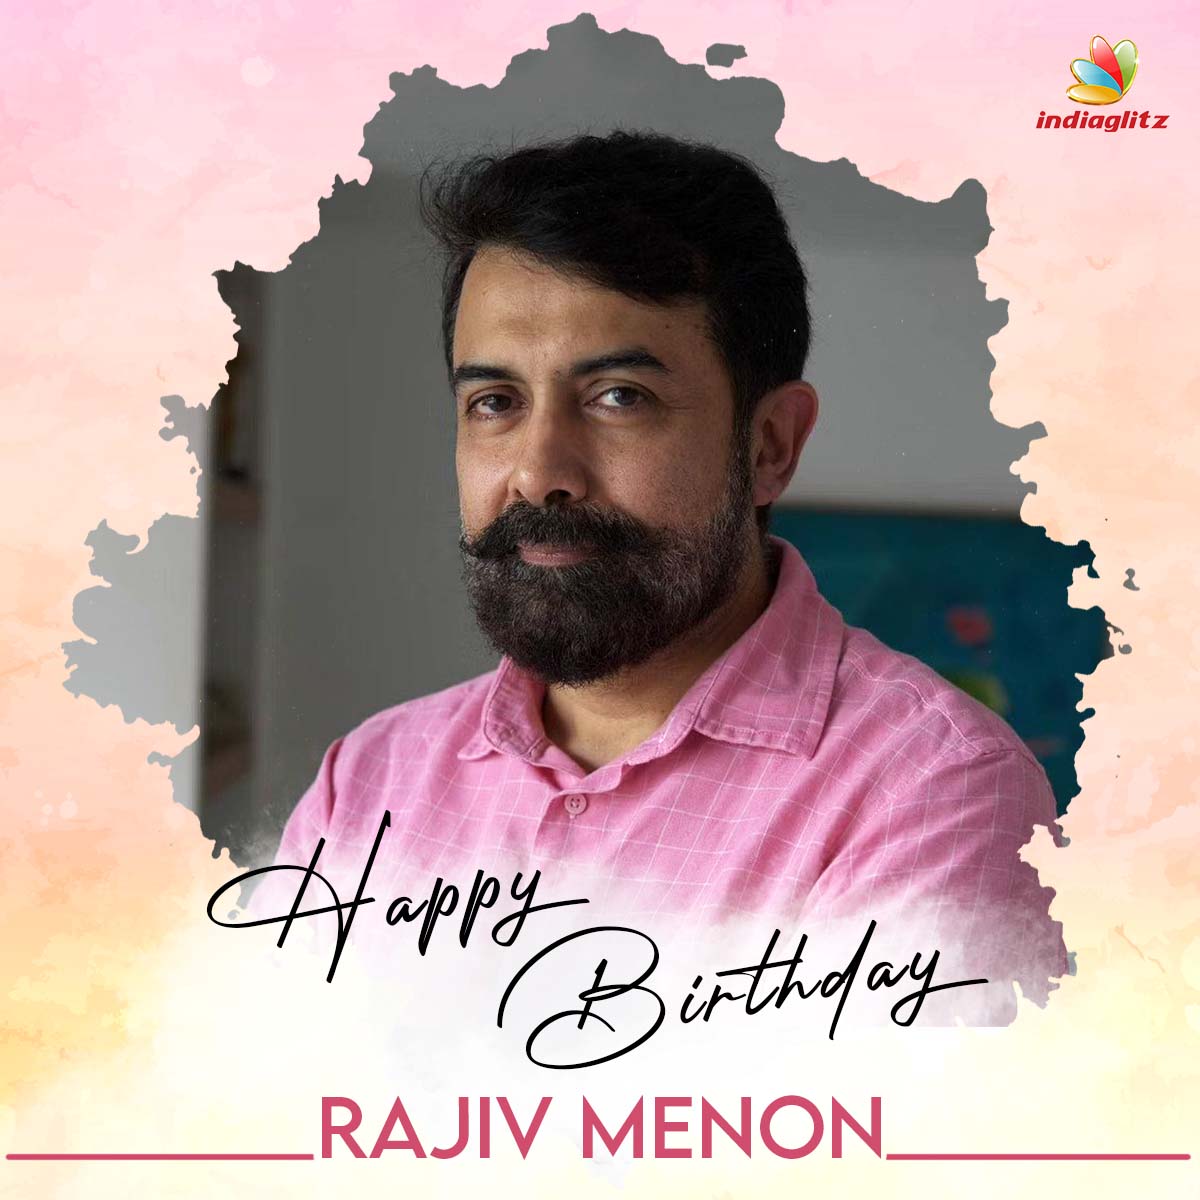 Wishing Director and Cinematographer @DirRajivMenon a Very Happy Birthday 🥳

#HappyBirthdayRajivMenon #HBDRajivMenon